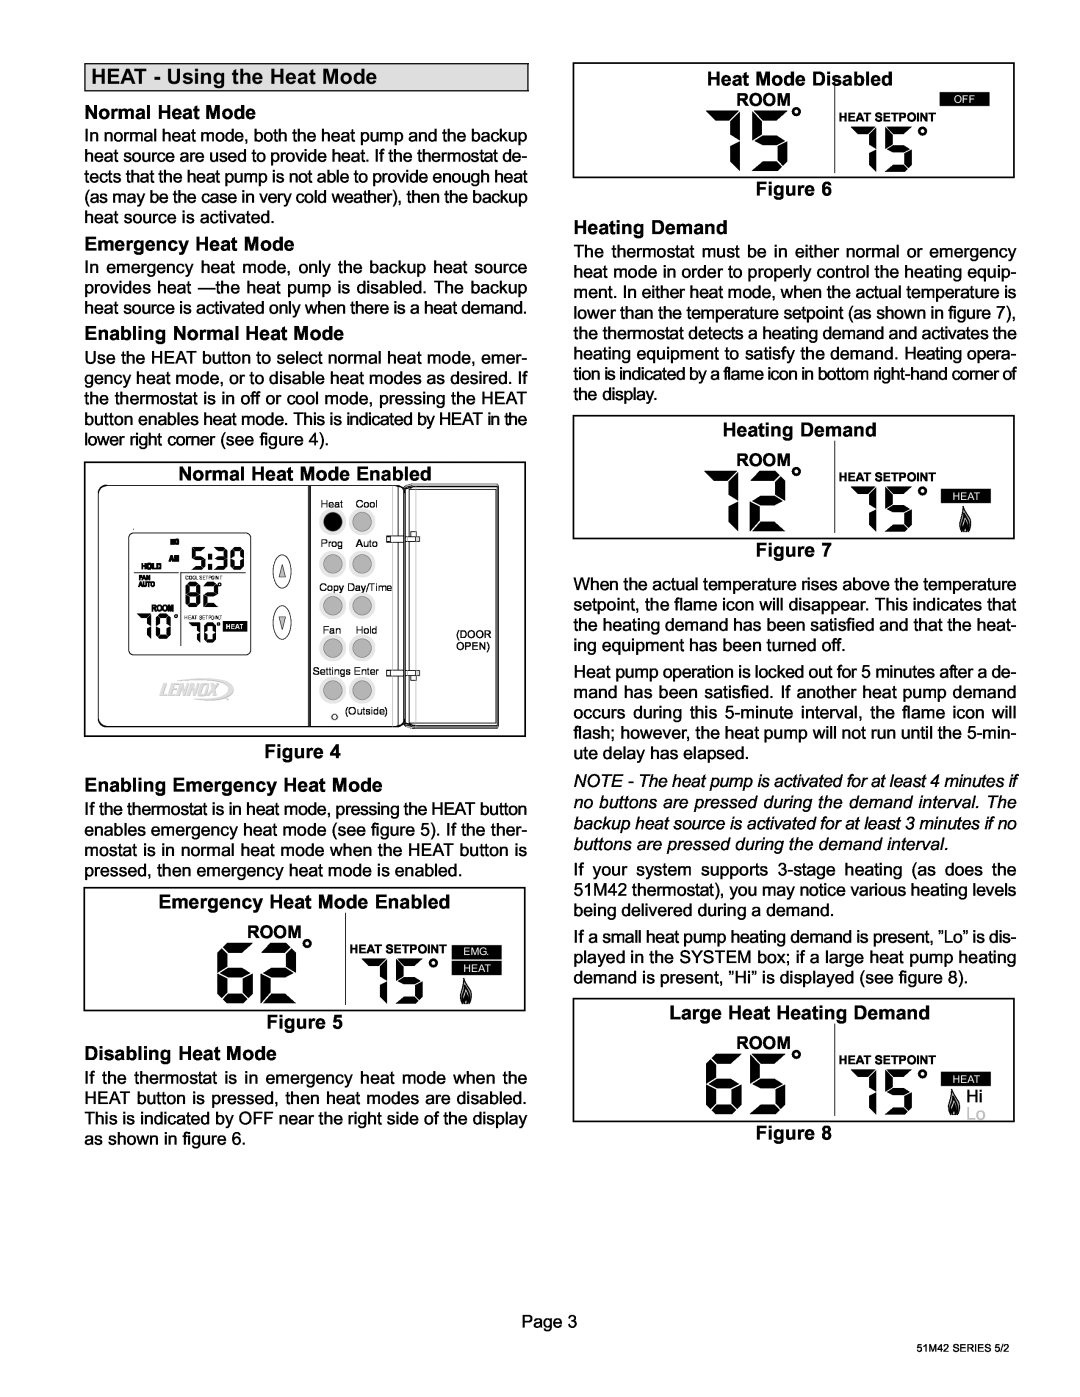 Lennox International Inc 51M37 operation manual HEAT − Using the Heat Mode, Normal Heat Mode 